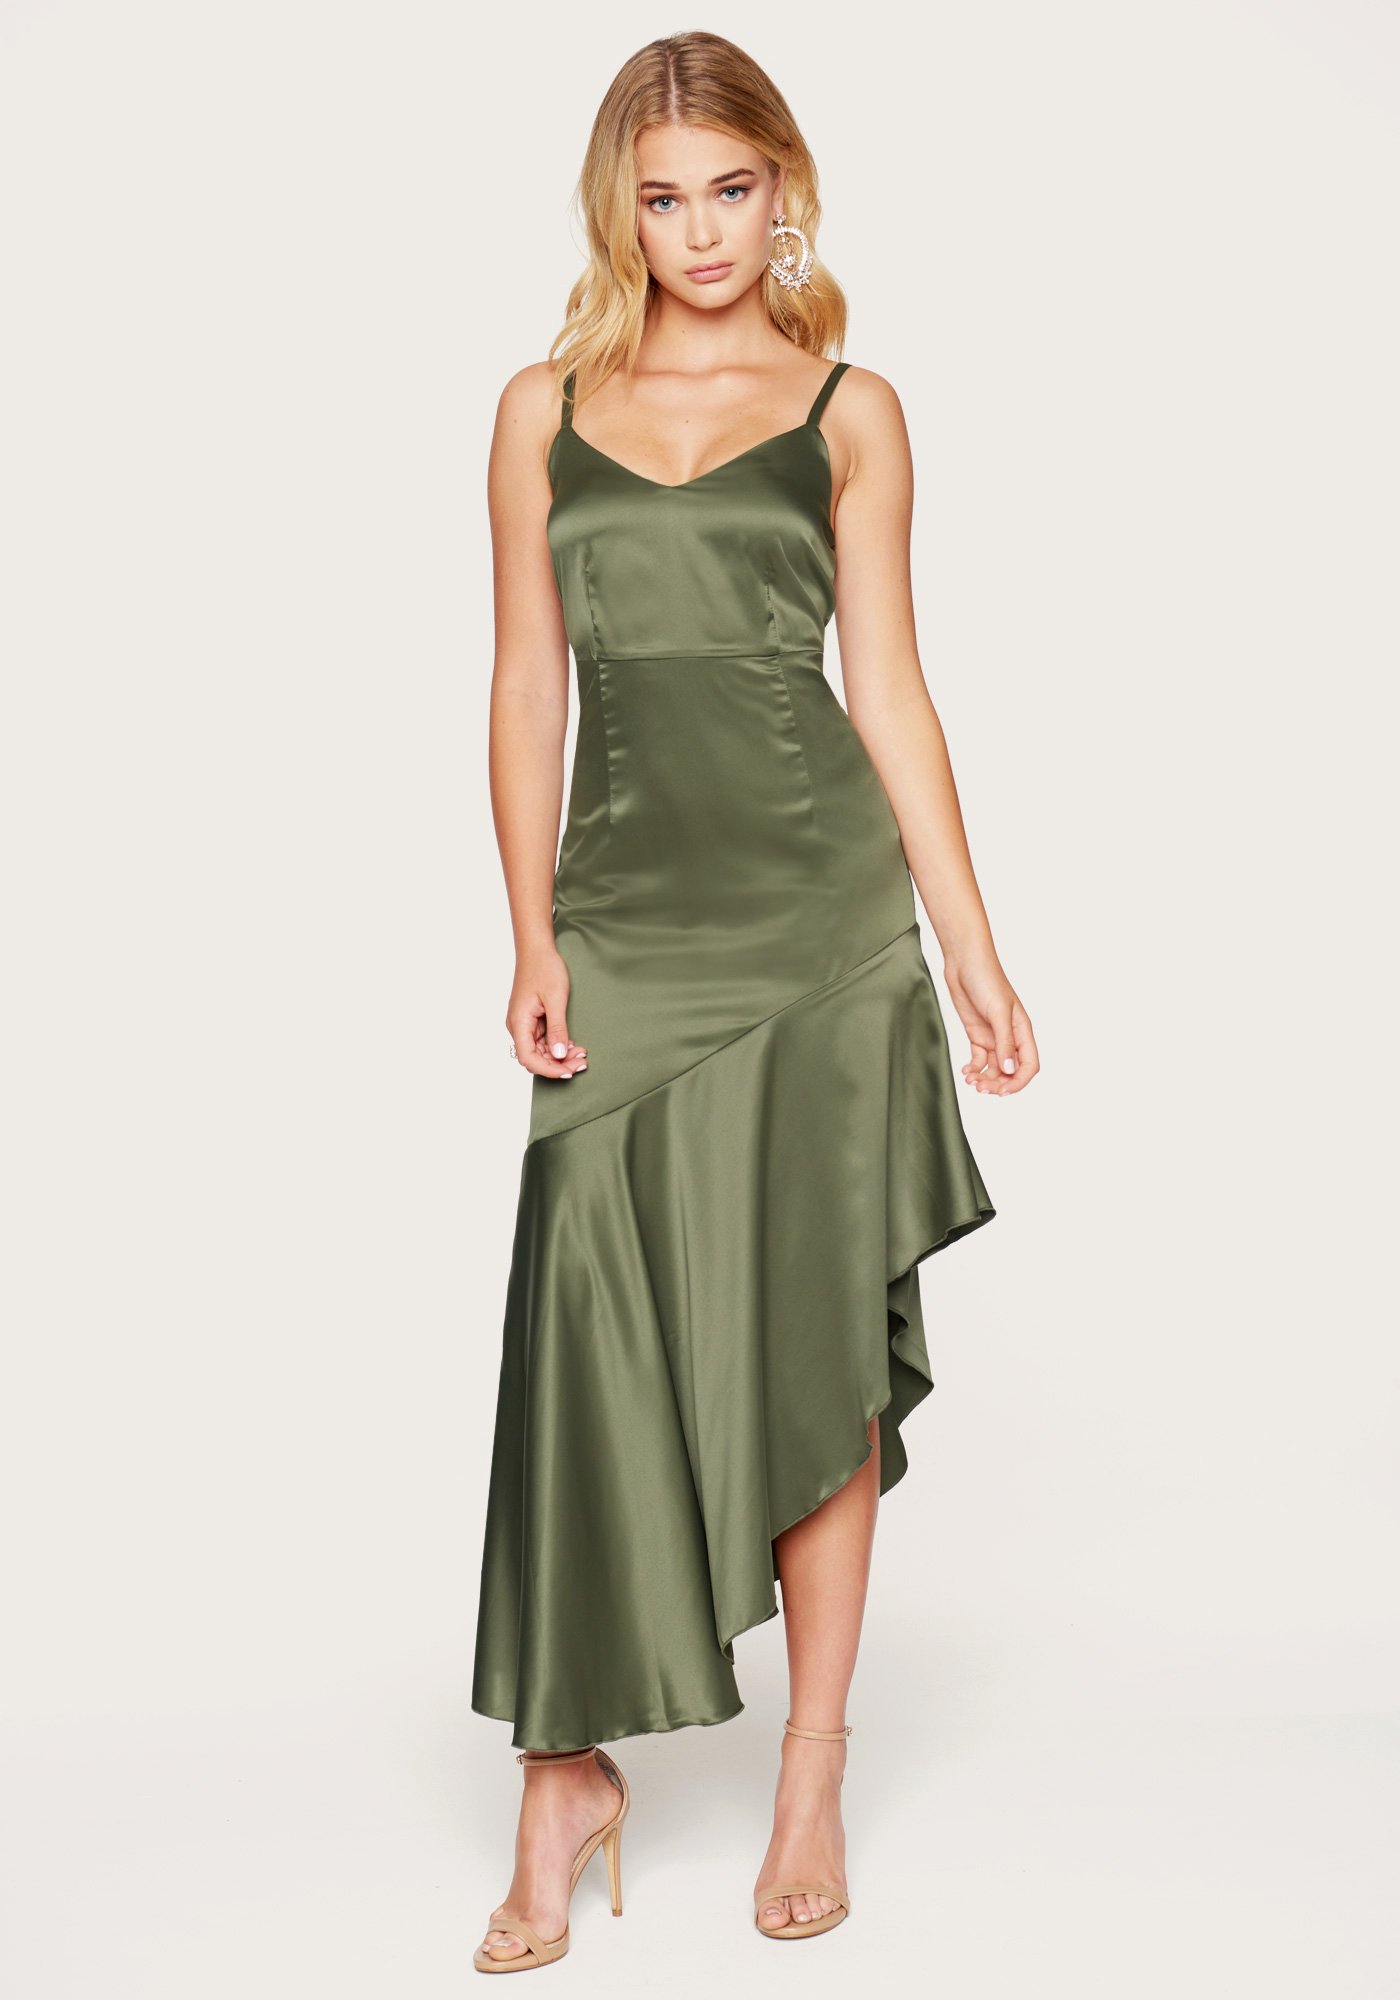 Bebe Women's Angled Ruffle Midi Dress, Size 6 in Dusty Olive Spandex